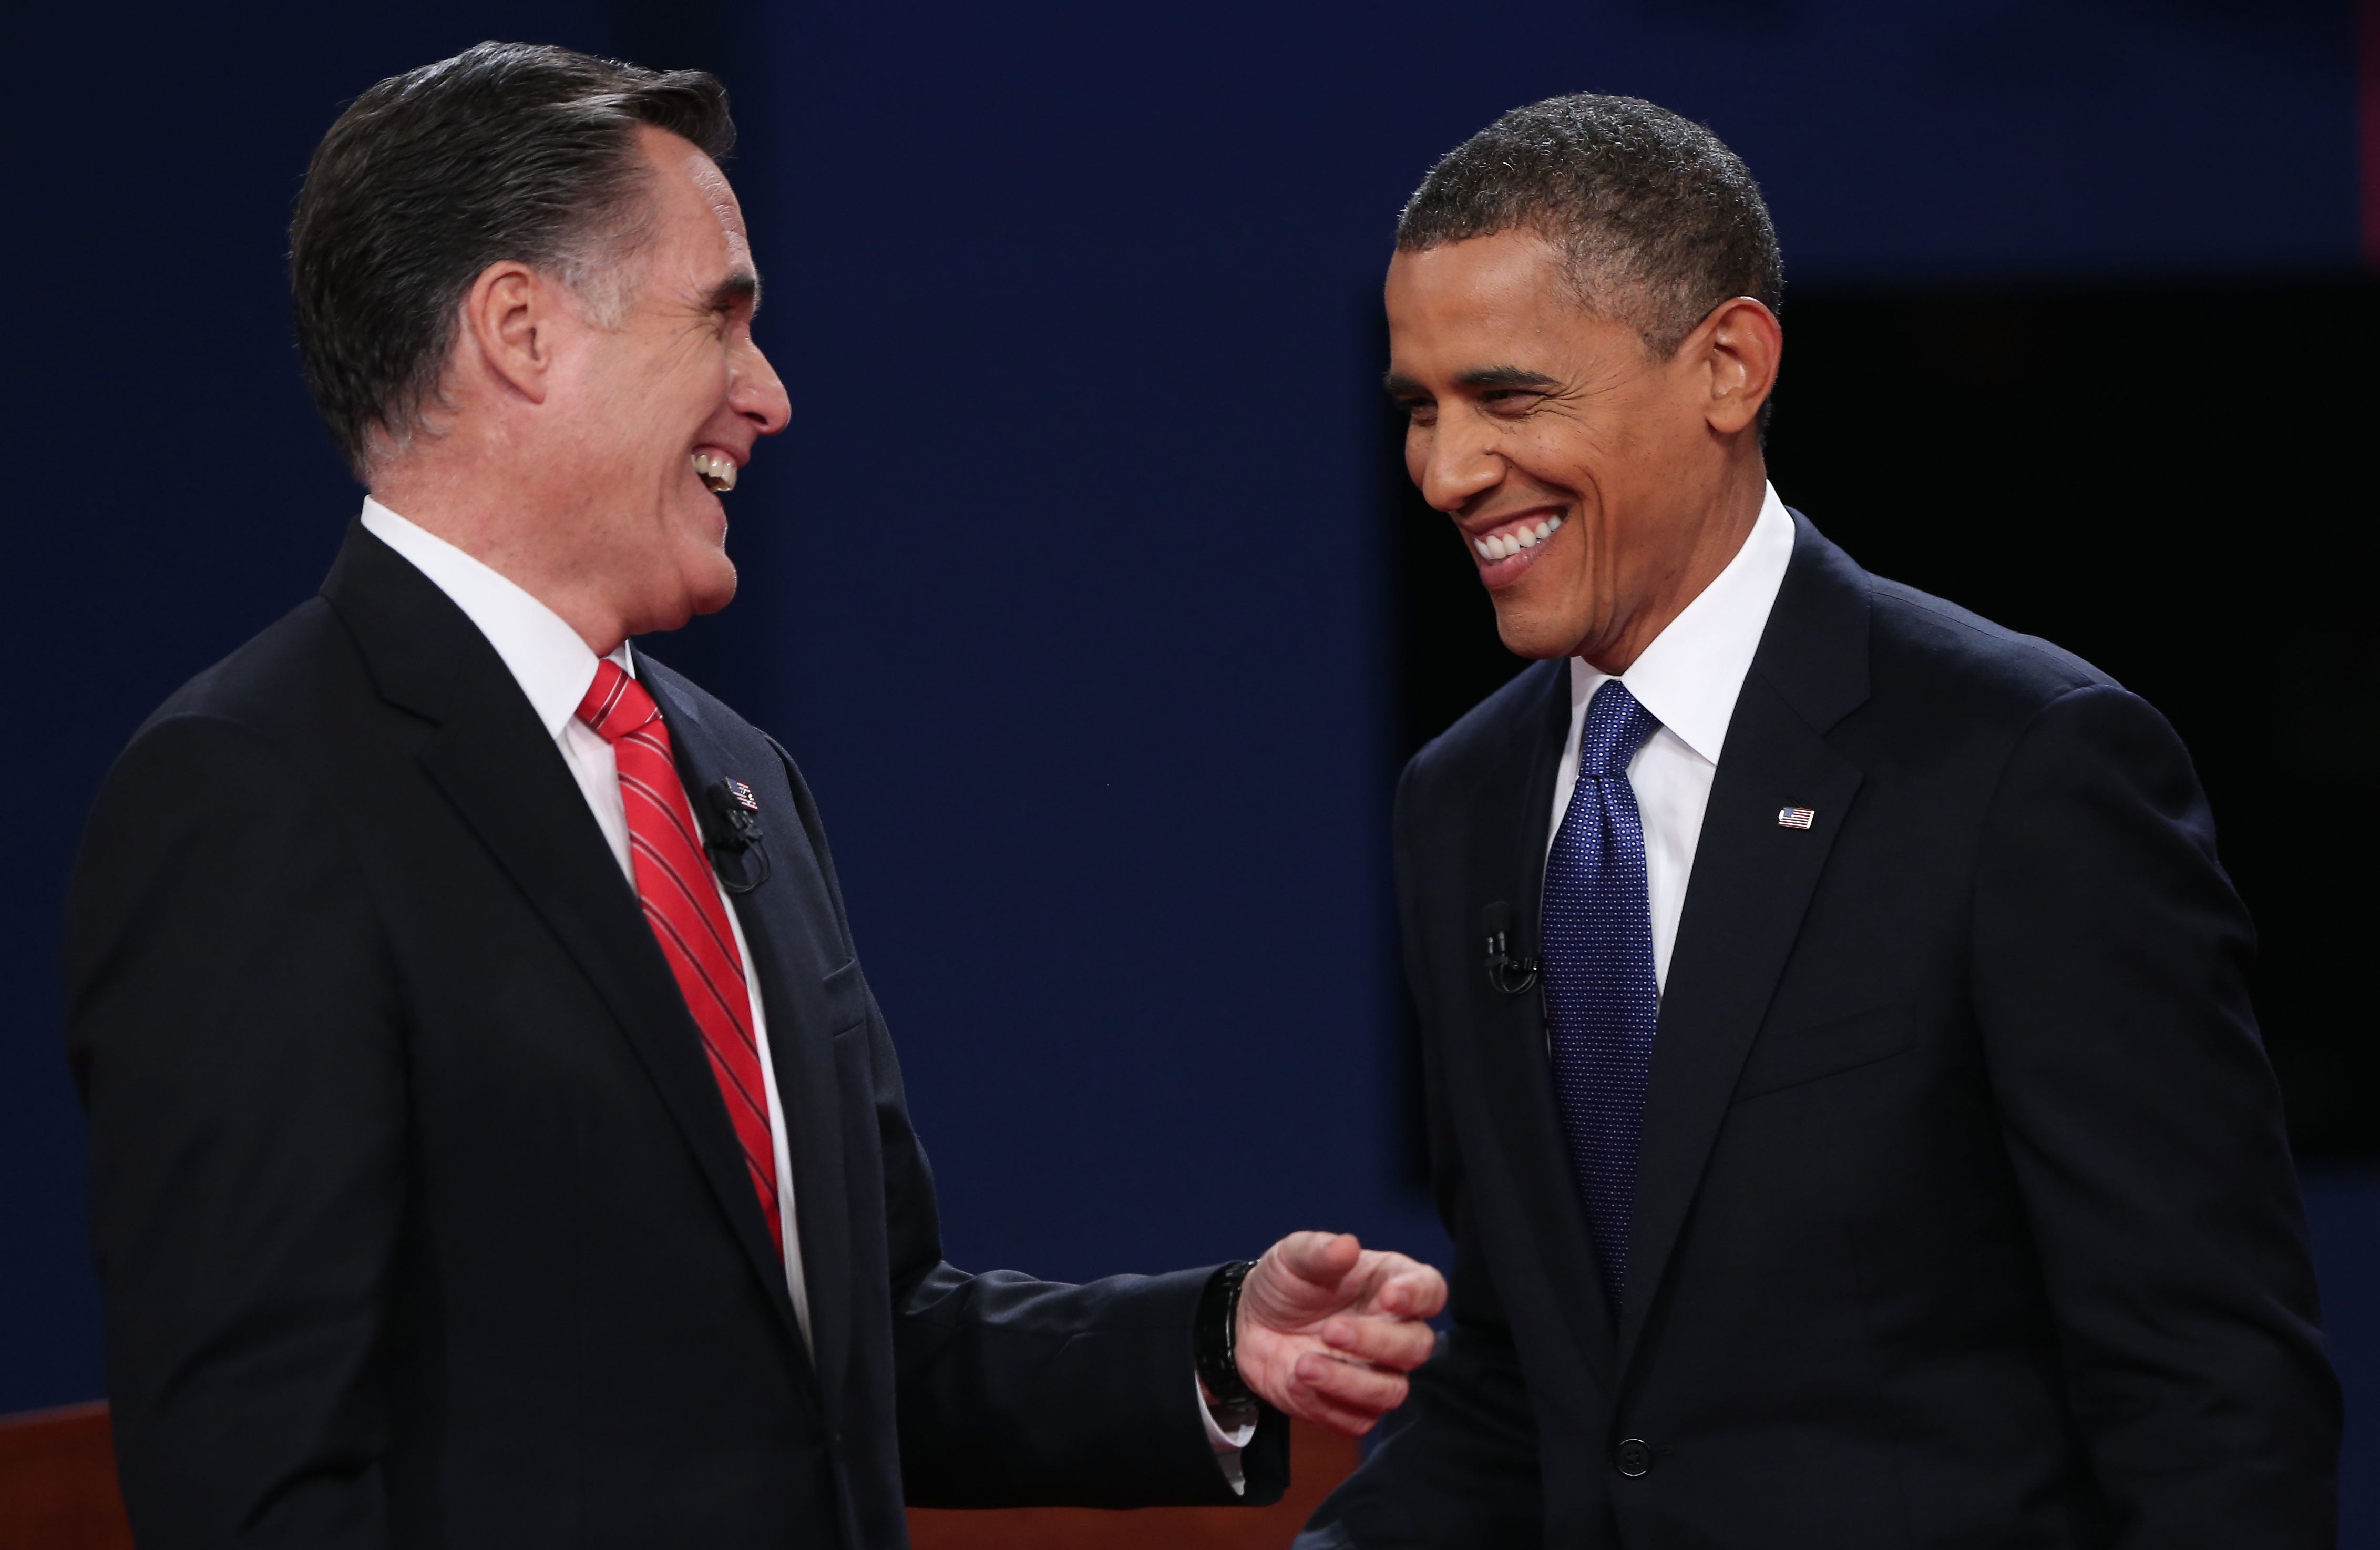 Obama and Romney smile after their first debate on October 3, 2012 in Denver, Colorado